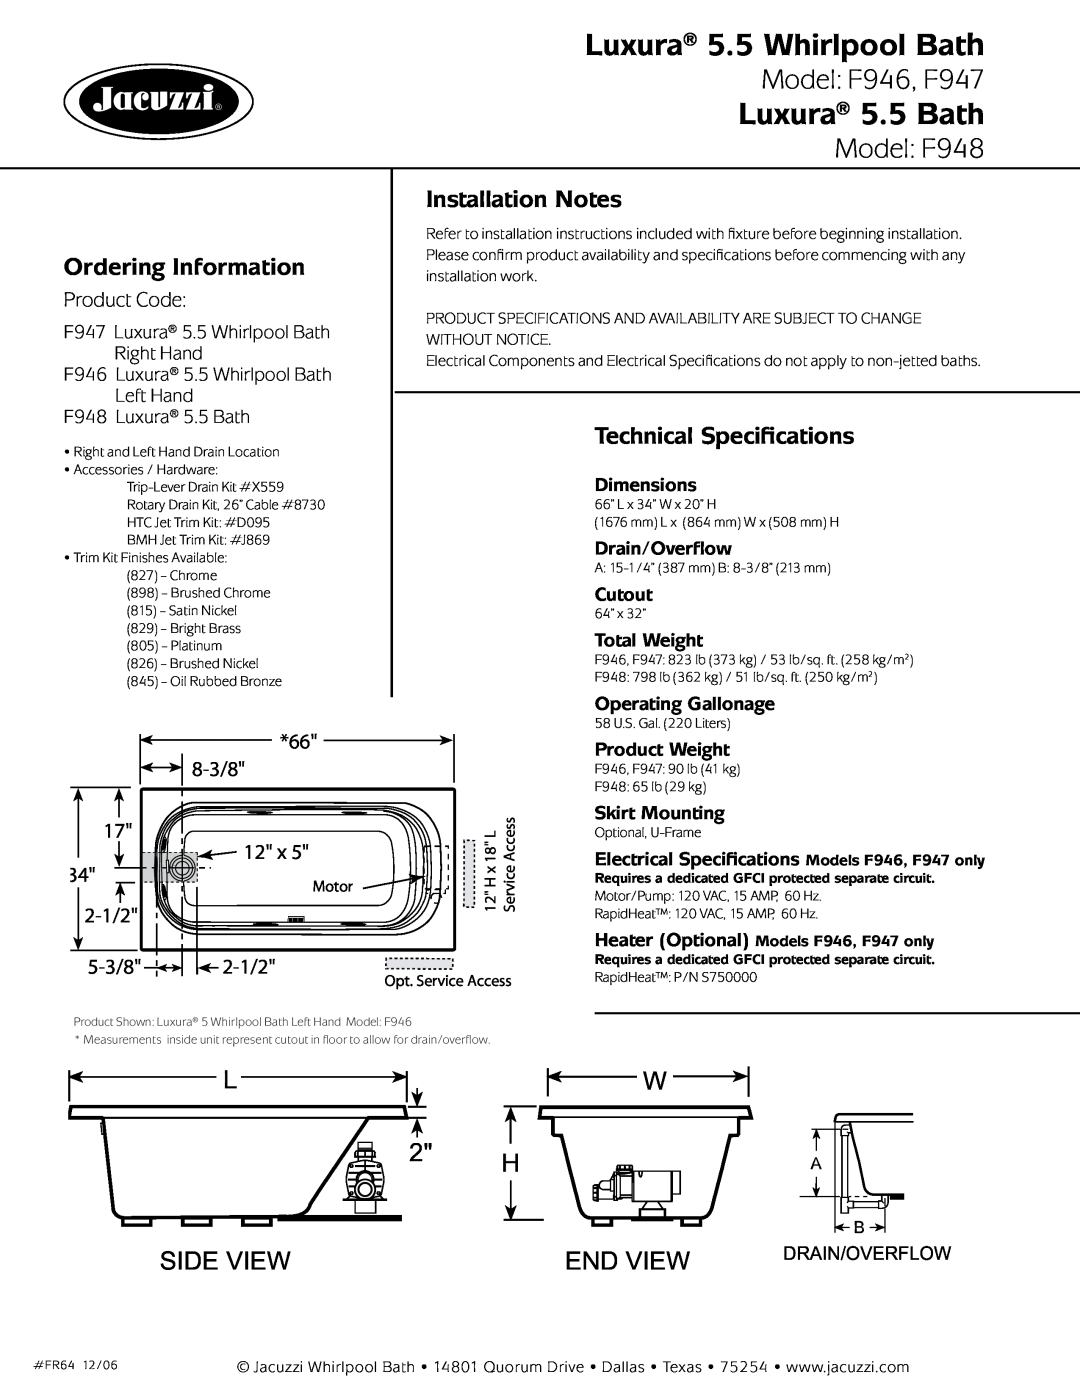 Jacuzzi F947-RH Luxura 5.5 Whirlpool Bath, Luxura 5.5 Bath, Model F946, F947, Model F948, Ordering Information, 8-3/8 